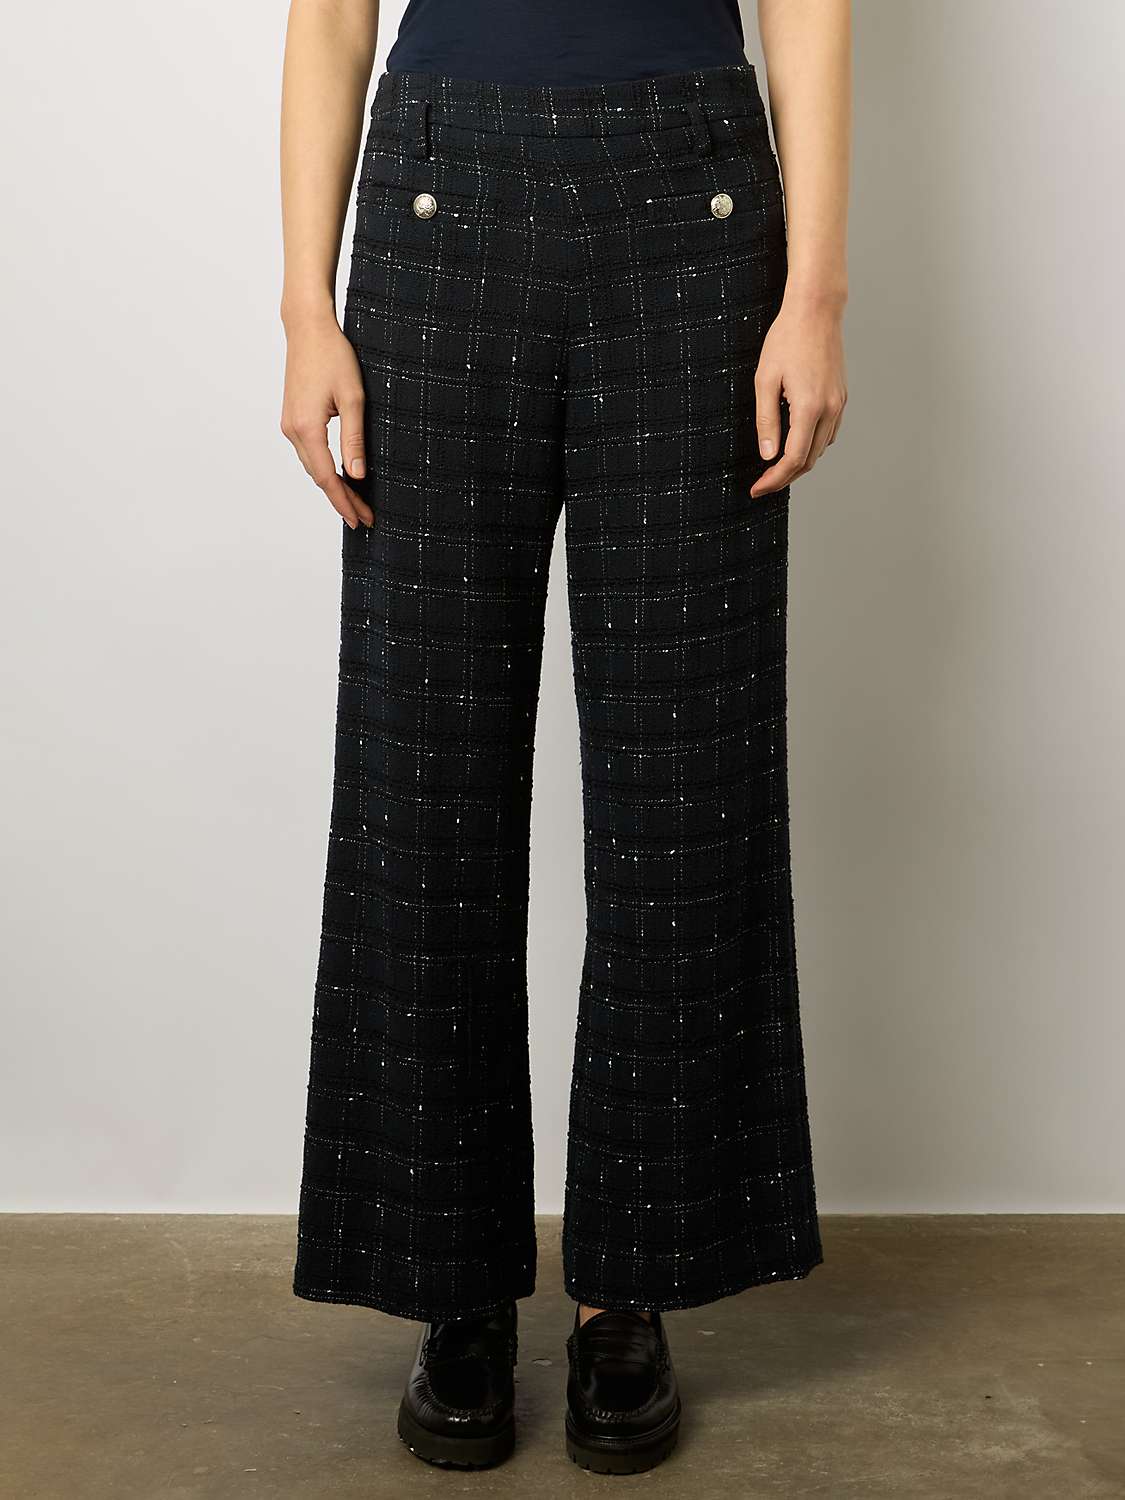 Buy Gerard Darel Cheraze Cotton Blend Trousers, Navy Online at johnlewis.com